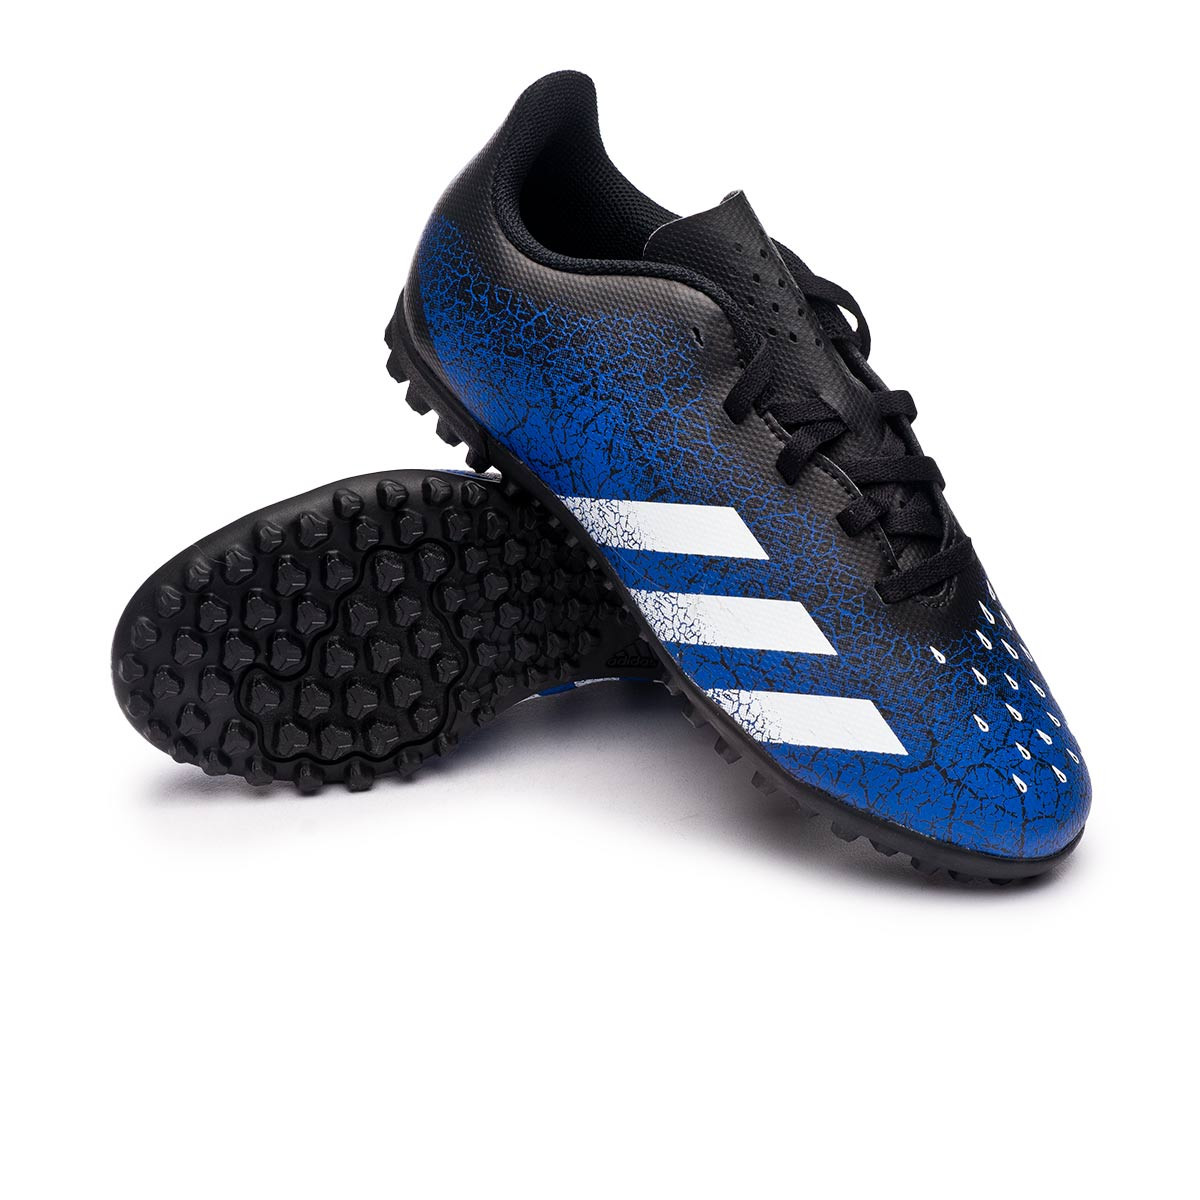 adidas predator blue and black